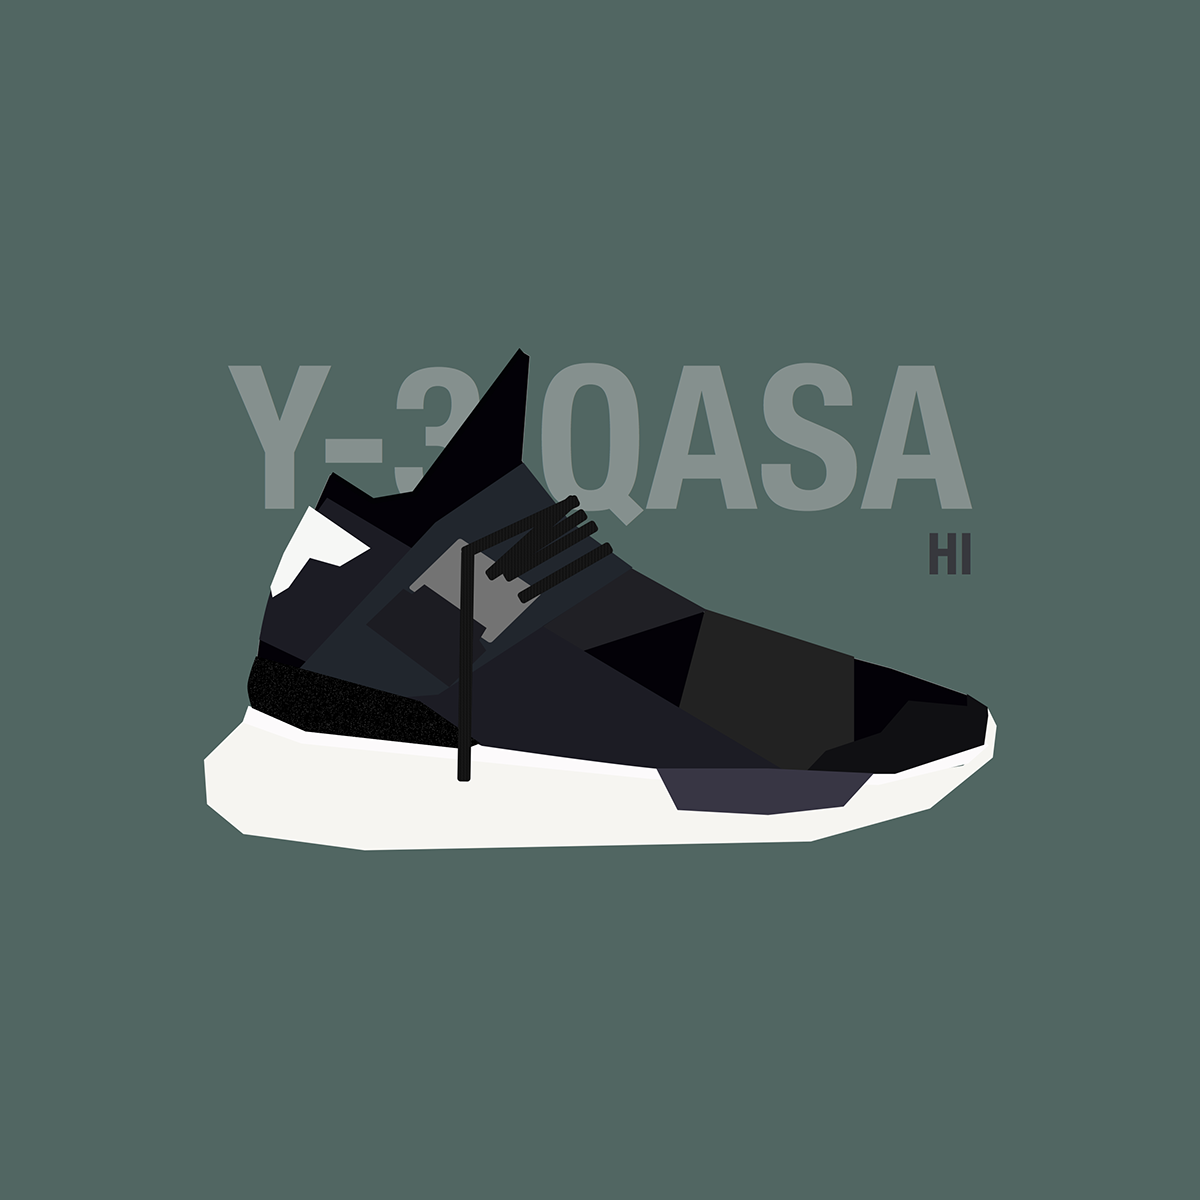 Y3 yohji yamamoto yohji yamamoto Y-3 qasa sneaker flat design sneakerhead hypebeast sneakerobsession adidas